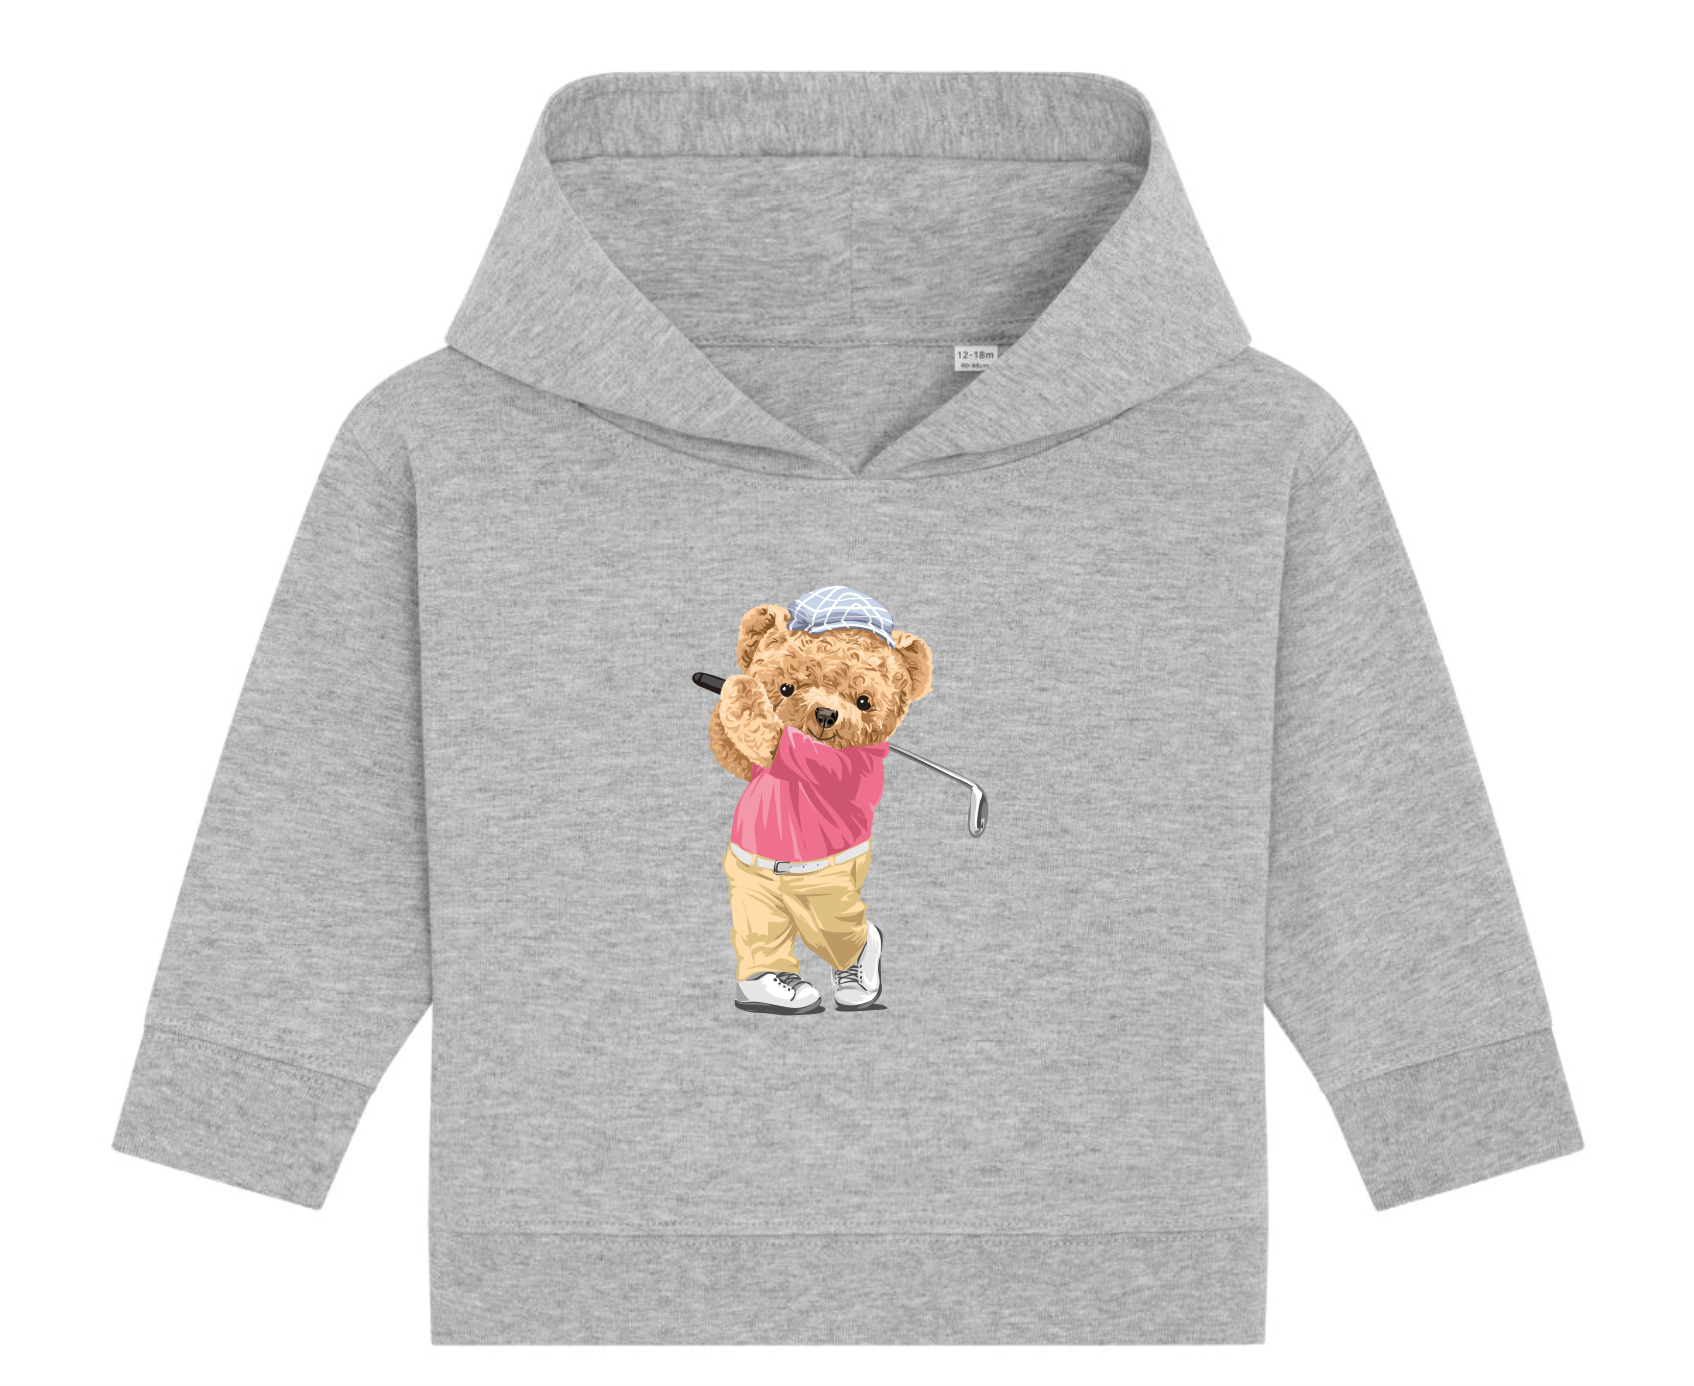 Merch4golf Baby-Kapuzensweatshirt